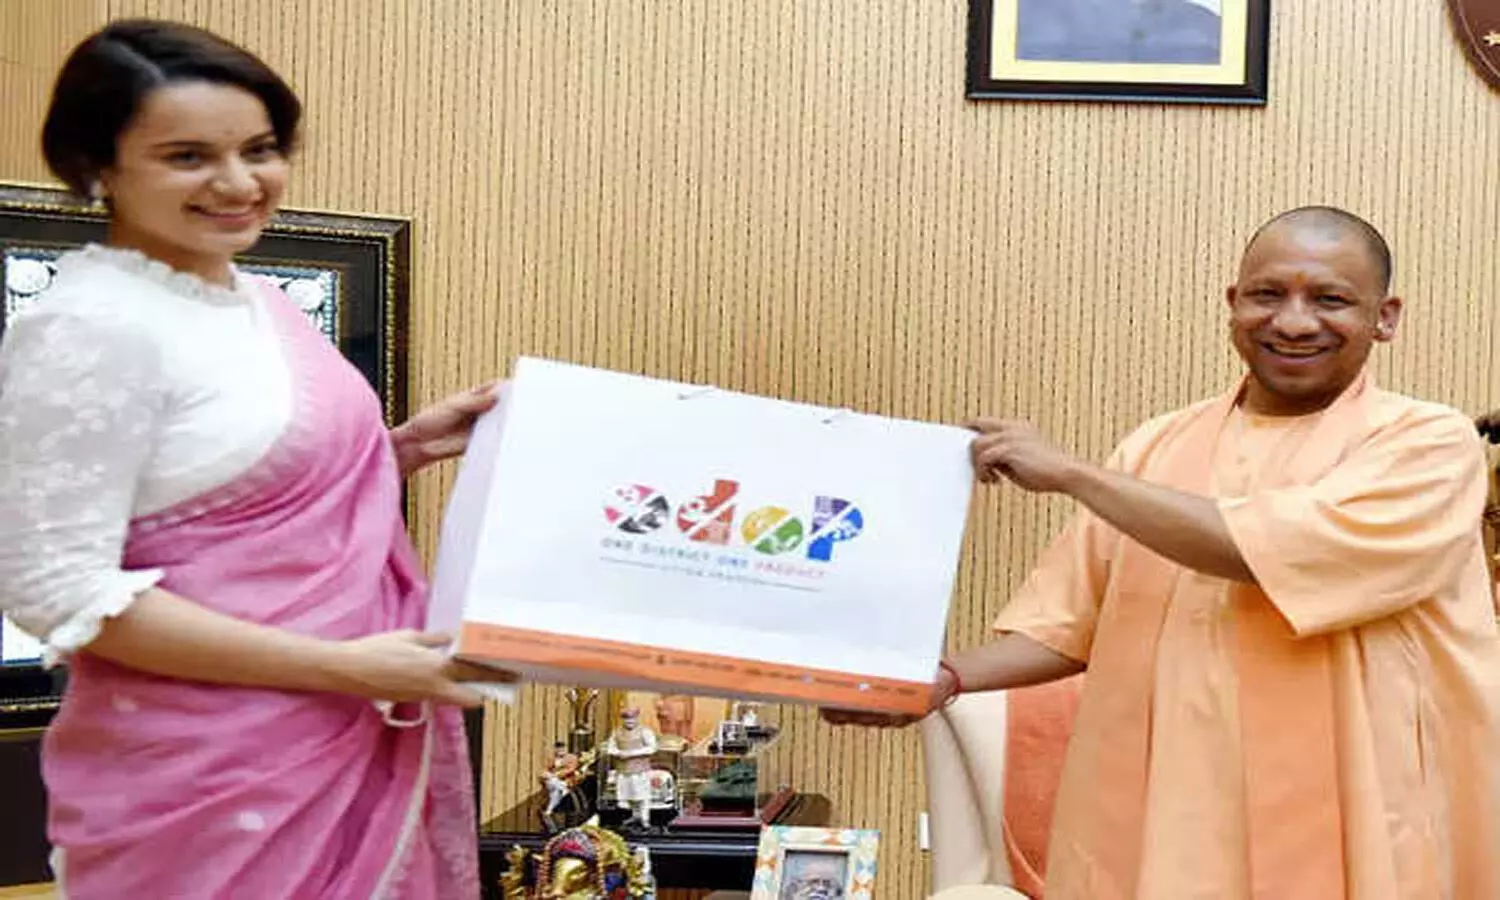 Kangana meets UP CM Yogi Adityanath, named brand ambassador of One District One Product scheme